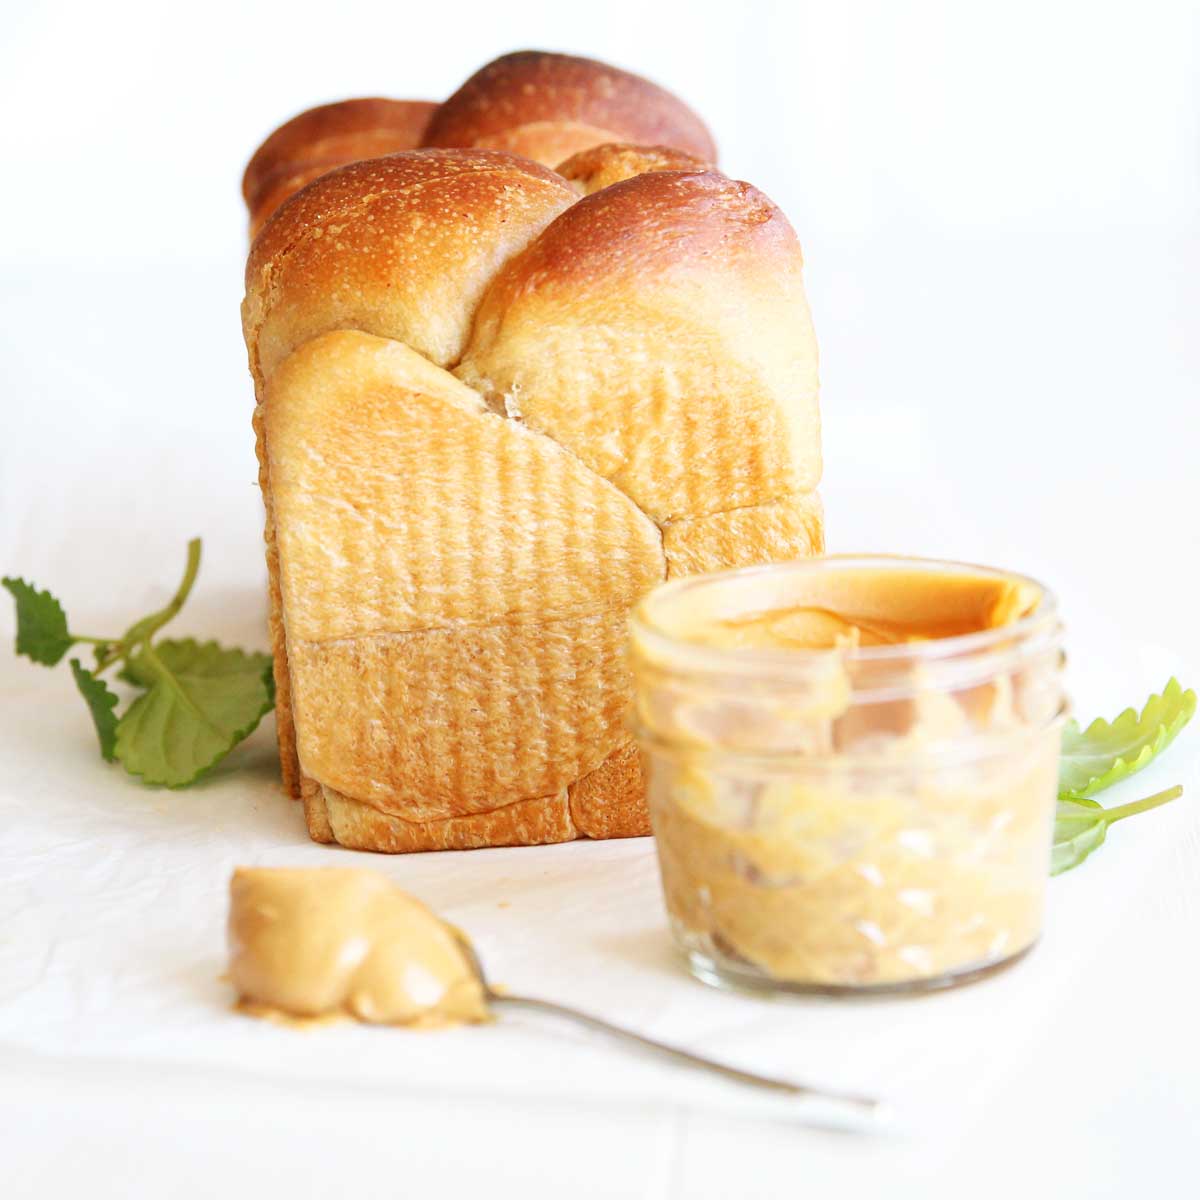 Peanut Butter Yeast Bread (A Healthier Vegan "Brioche" Recipe) - Carrot Banana Bread